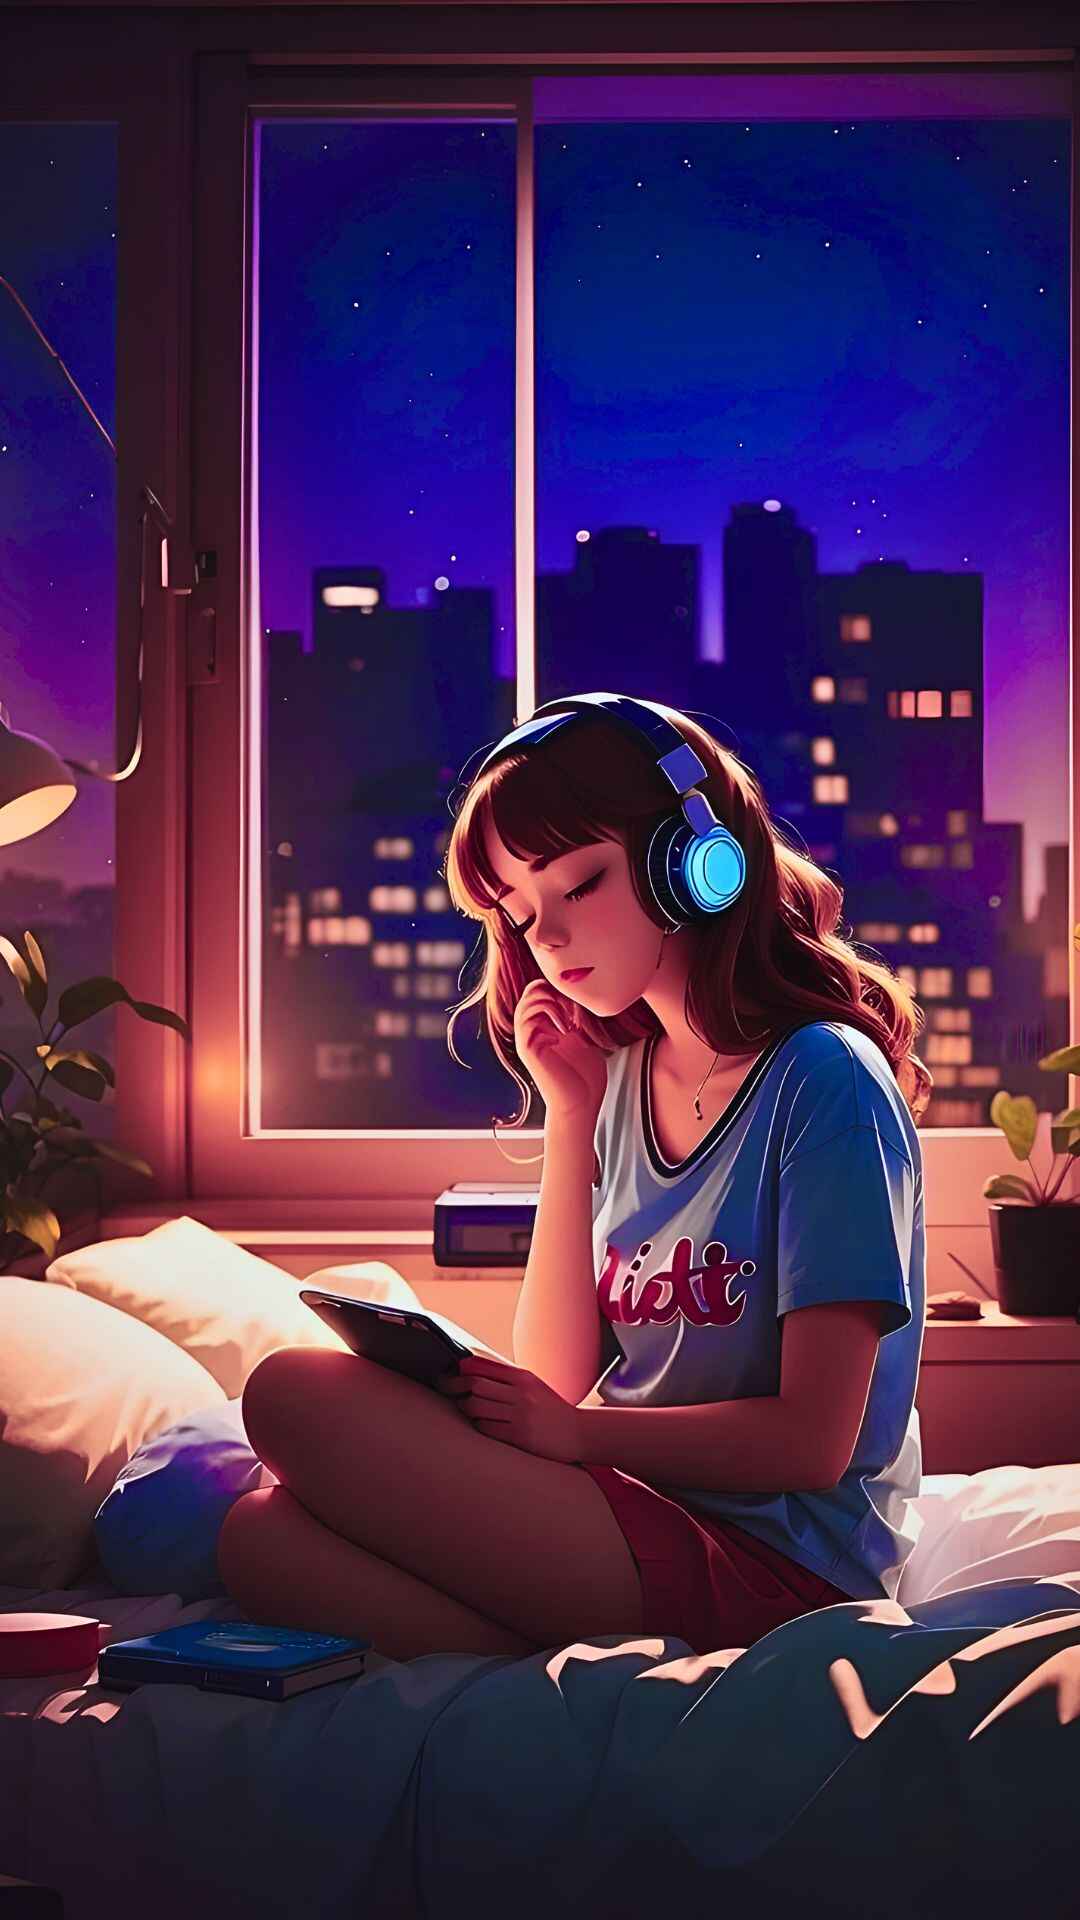 Anime Girl With Headphones Wallpaper iPhone